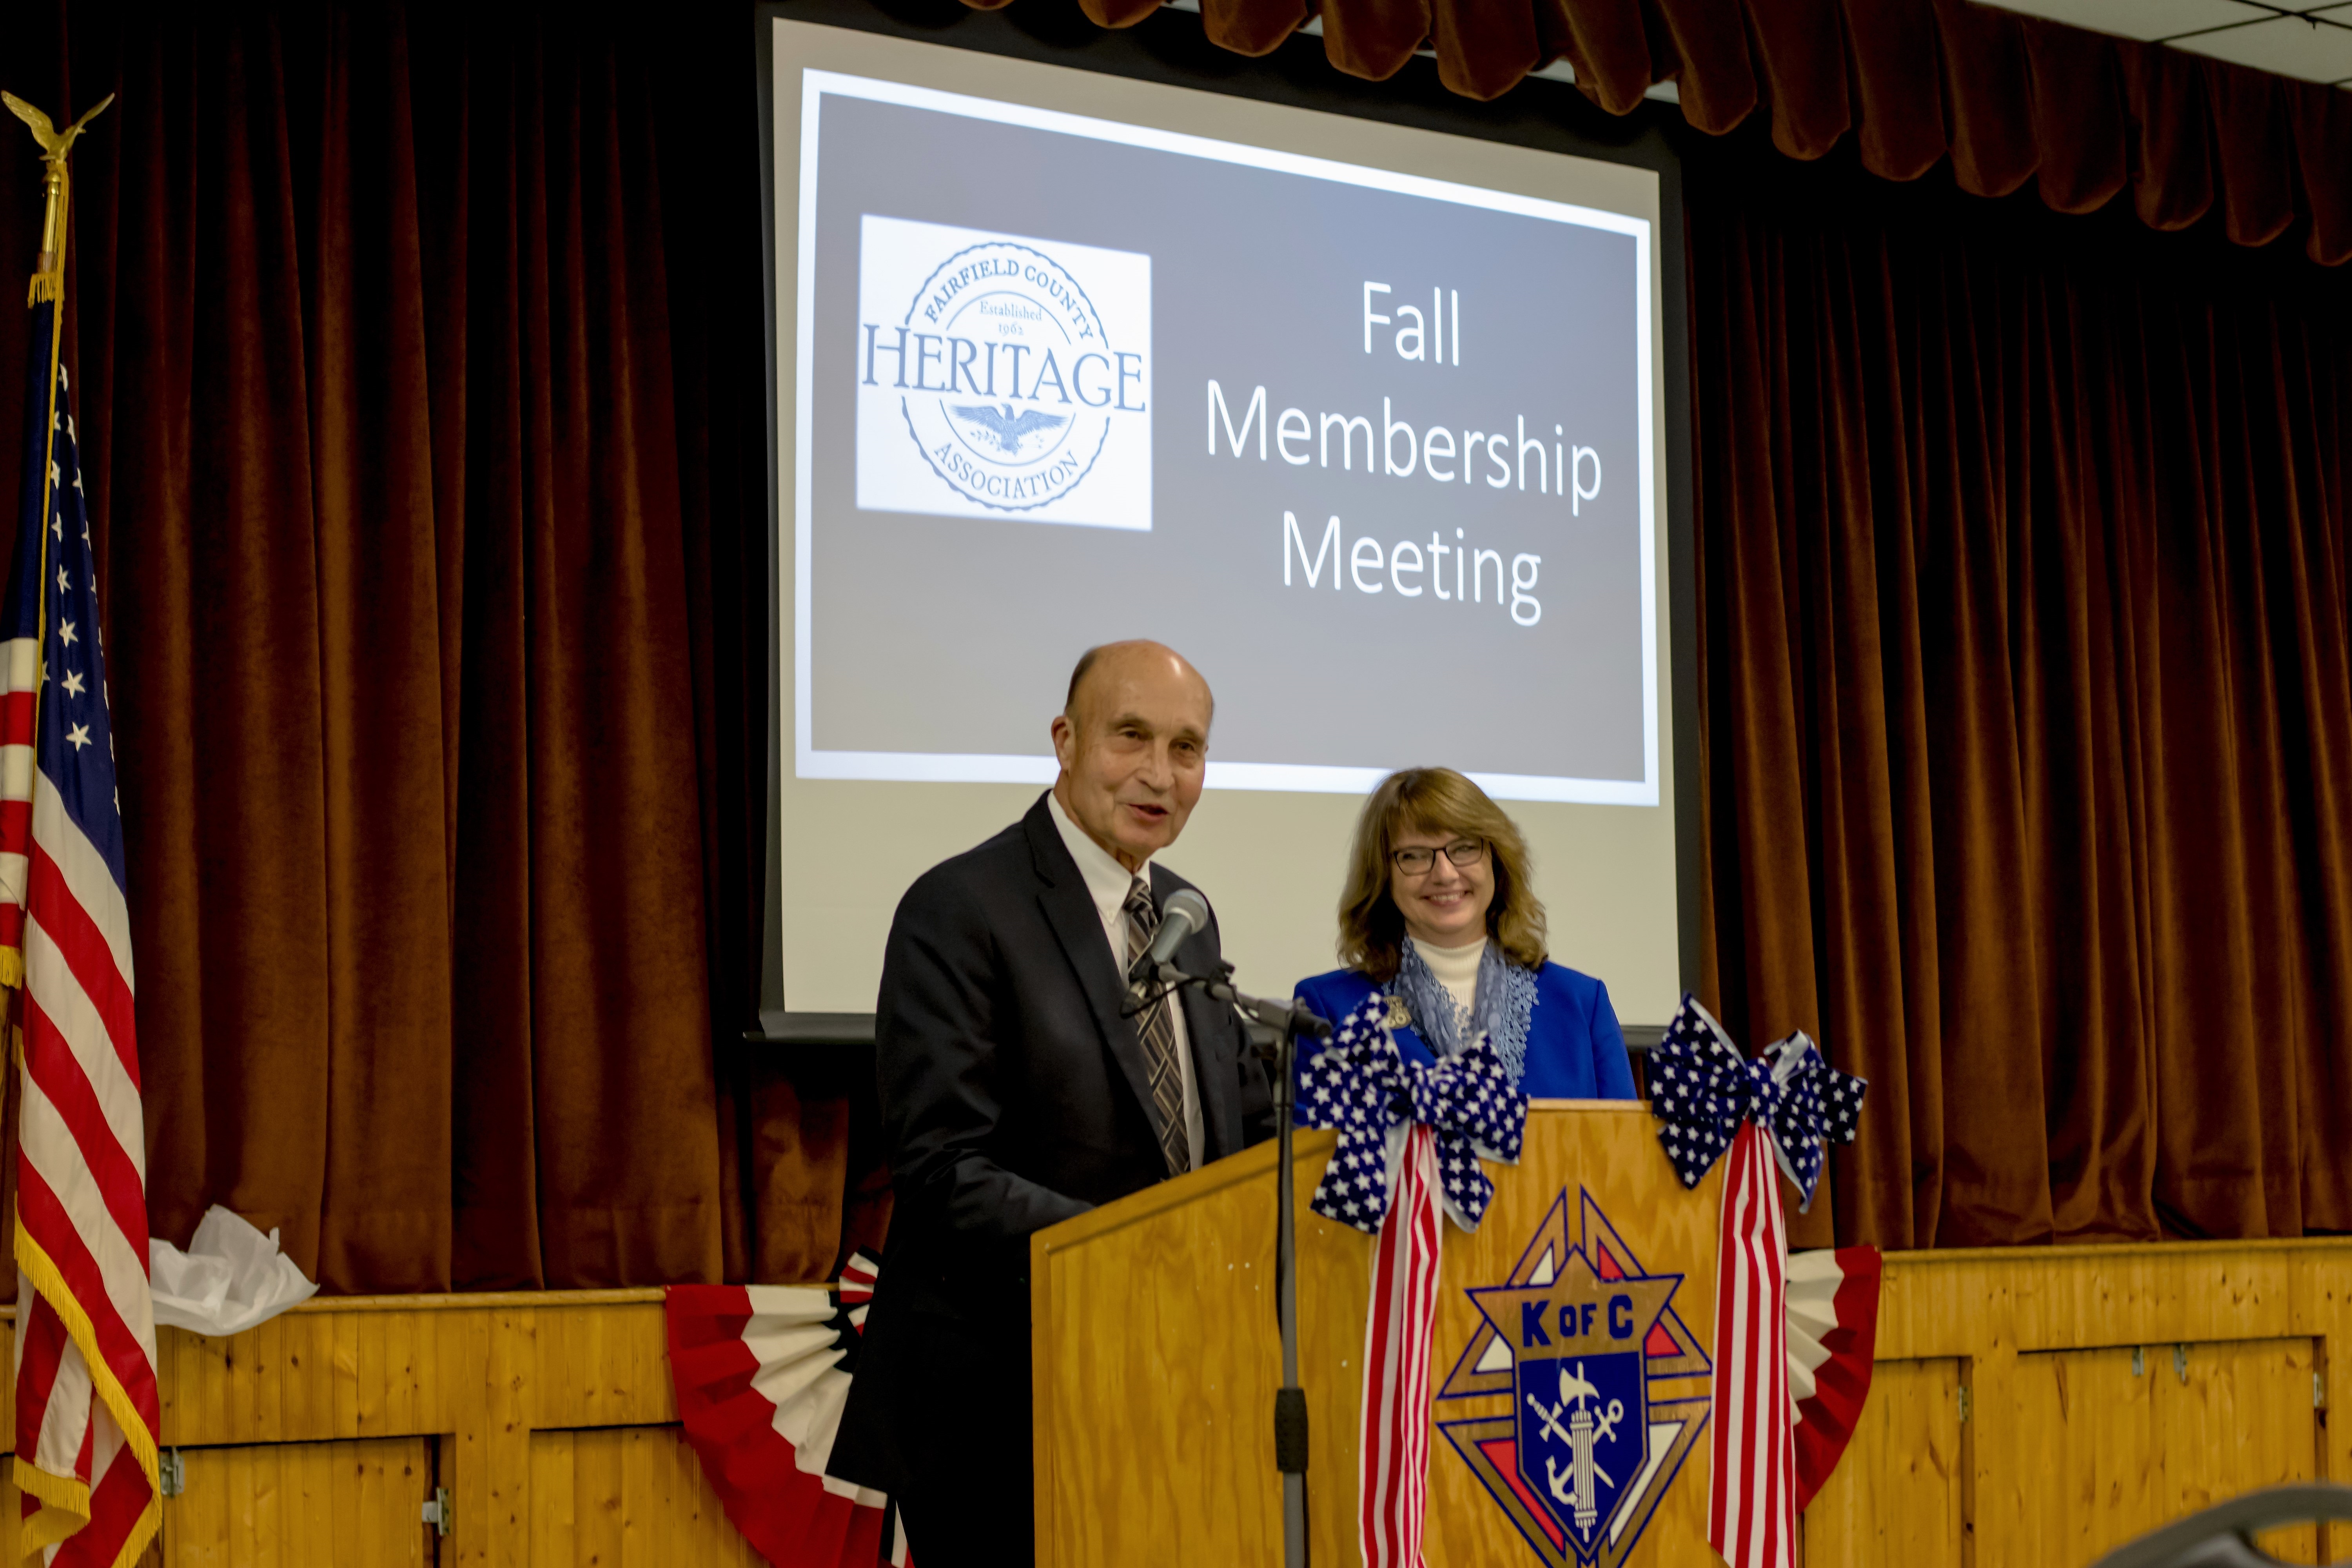 2019 Fall Dinner Membership Meeting - mand and woman speaking at podium